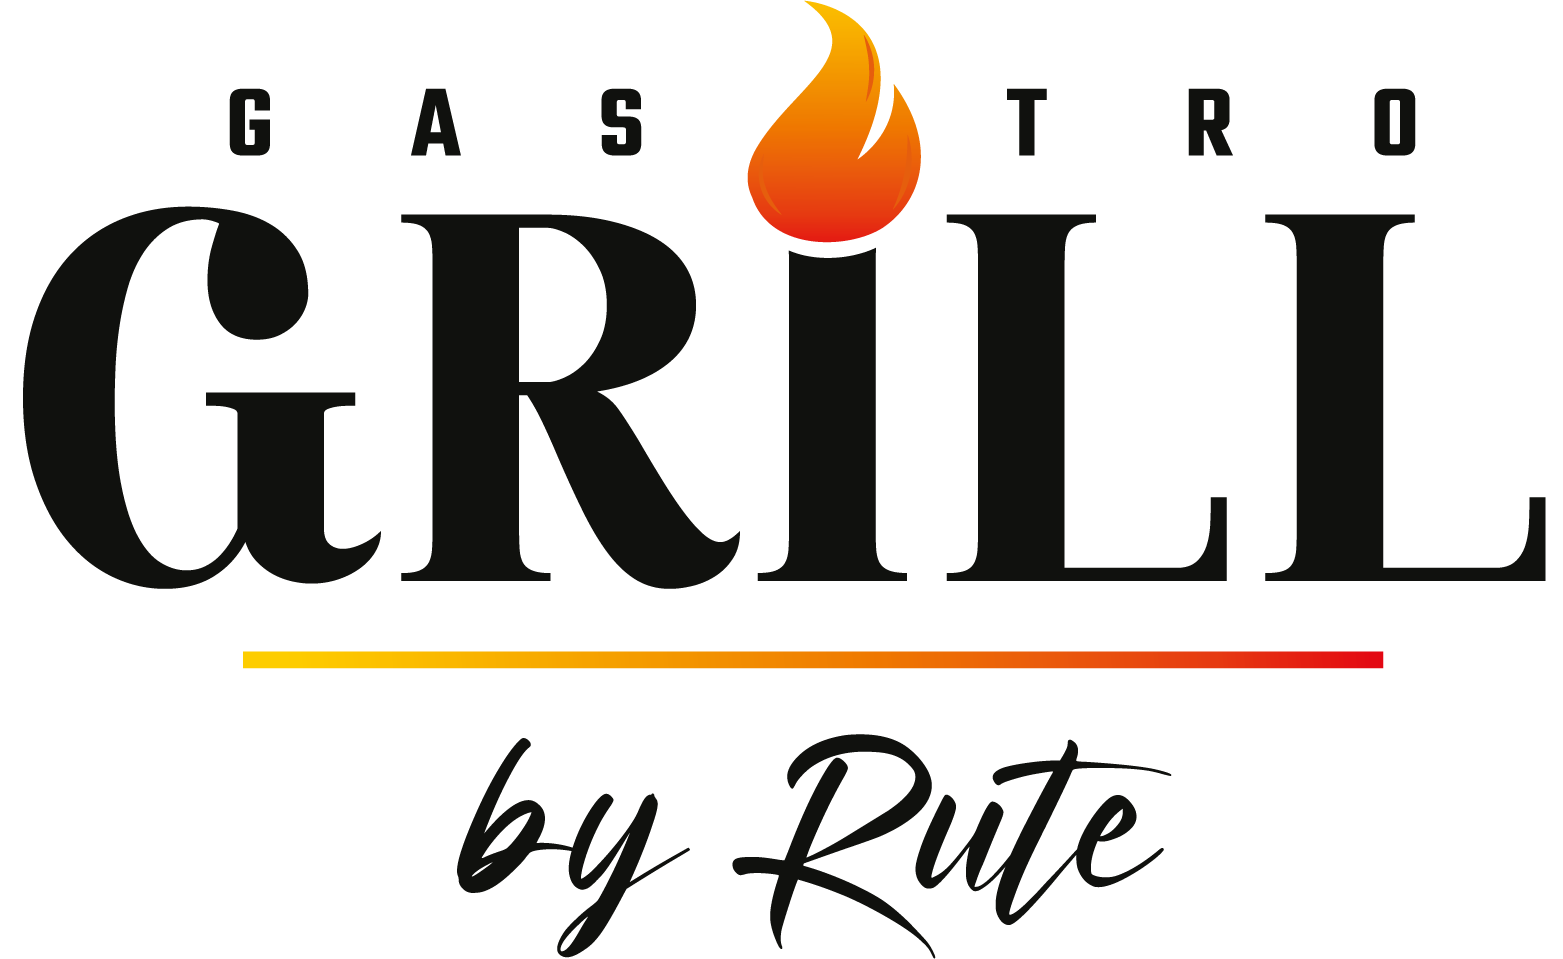 Gastro Grill by Rute